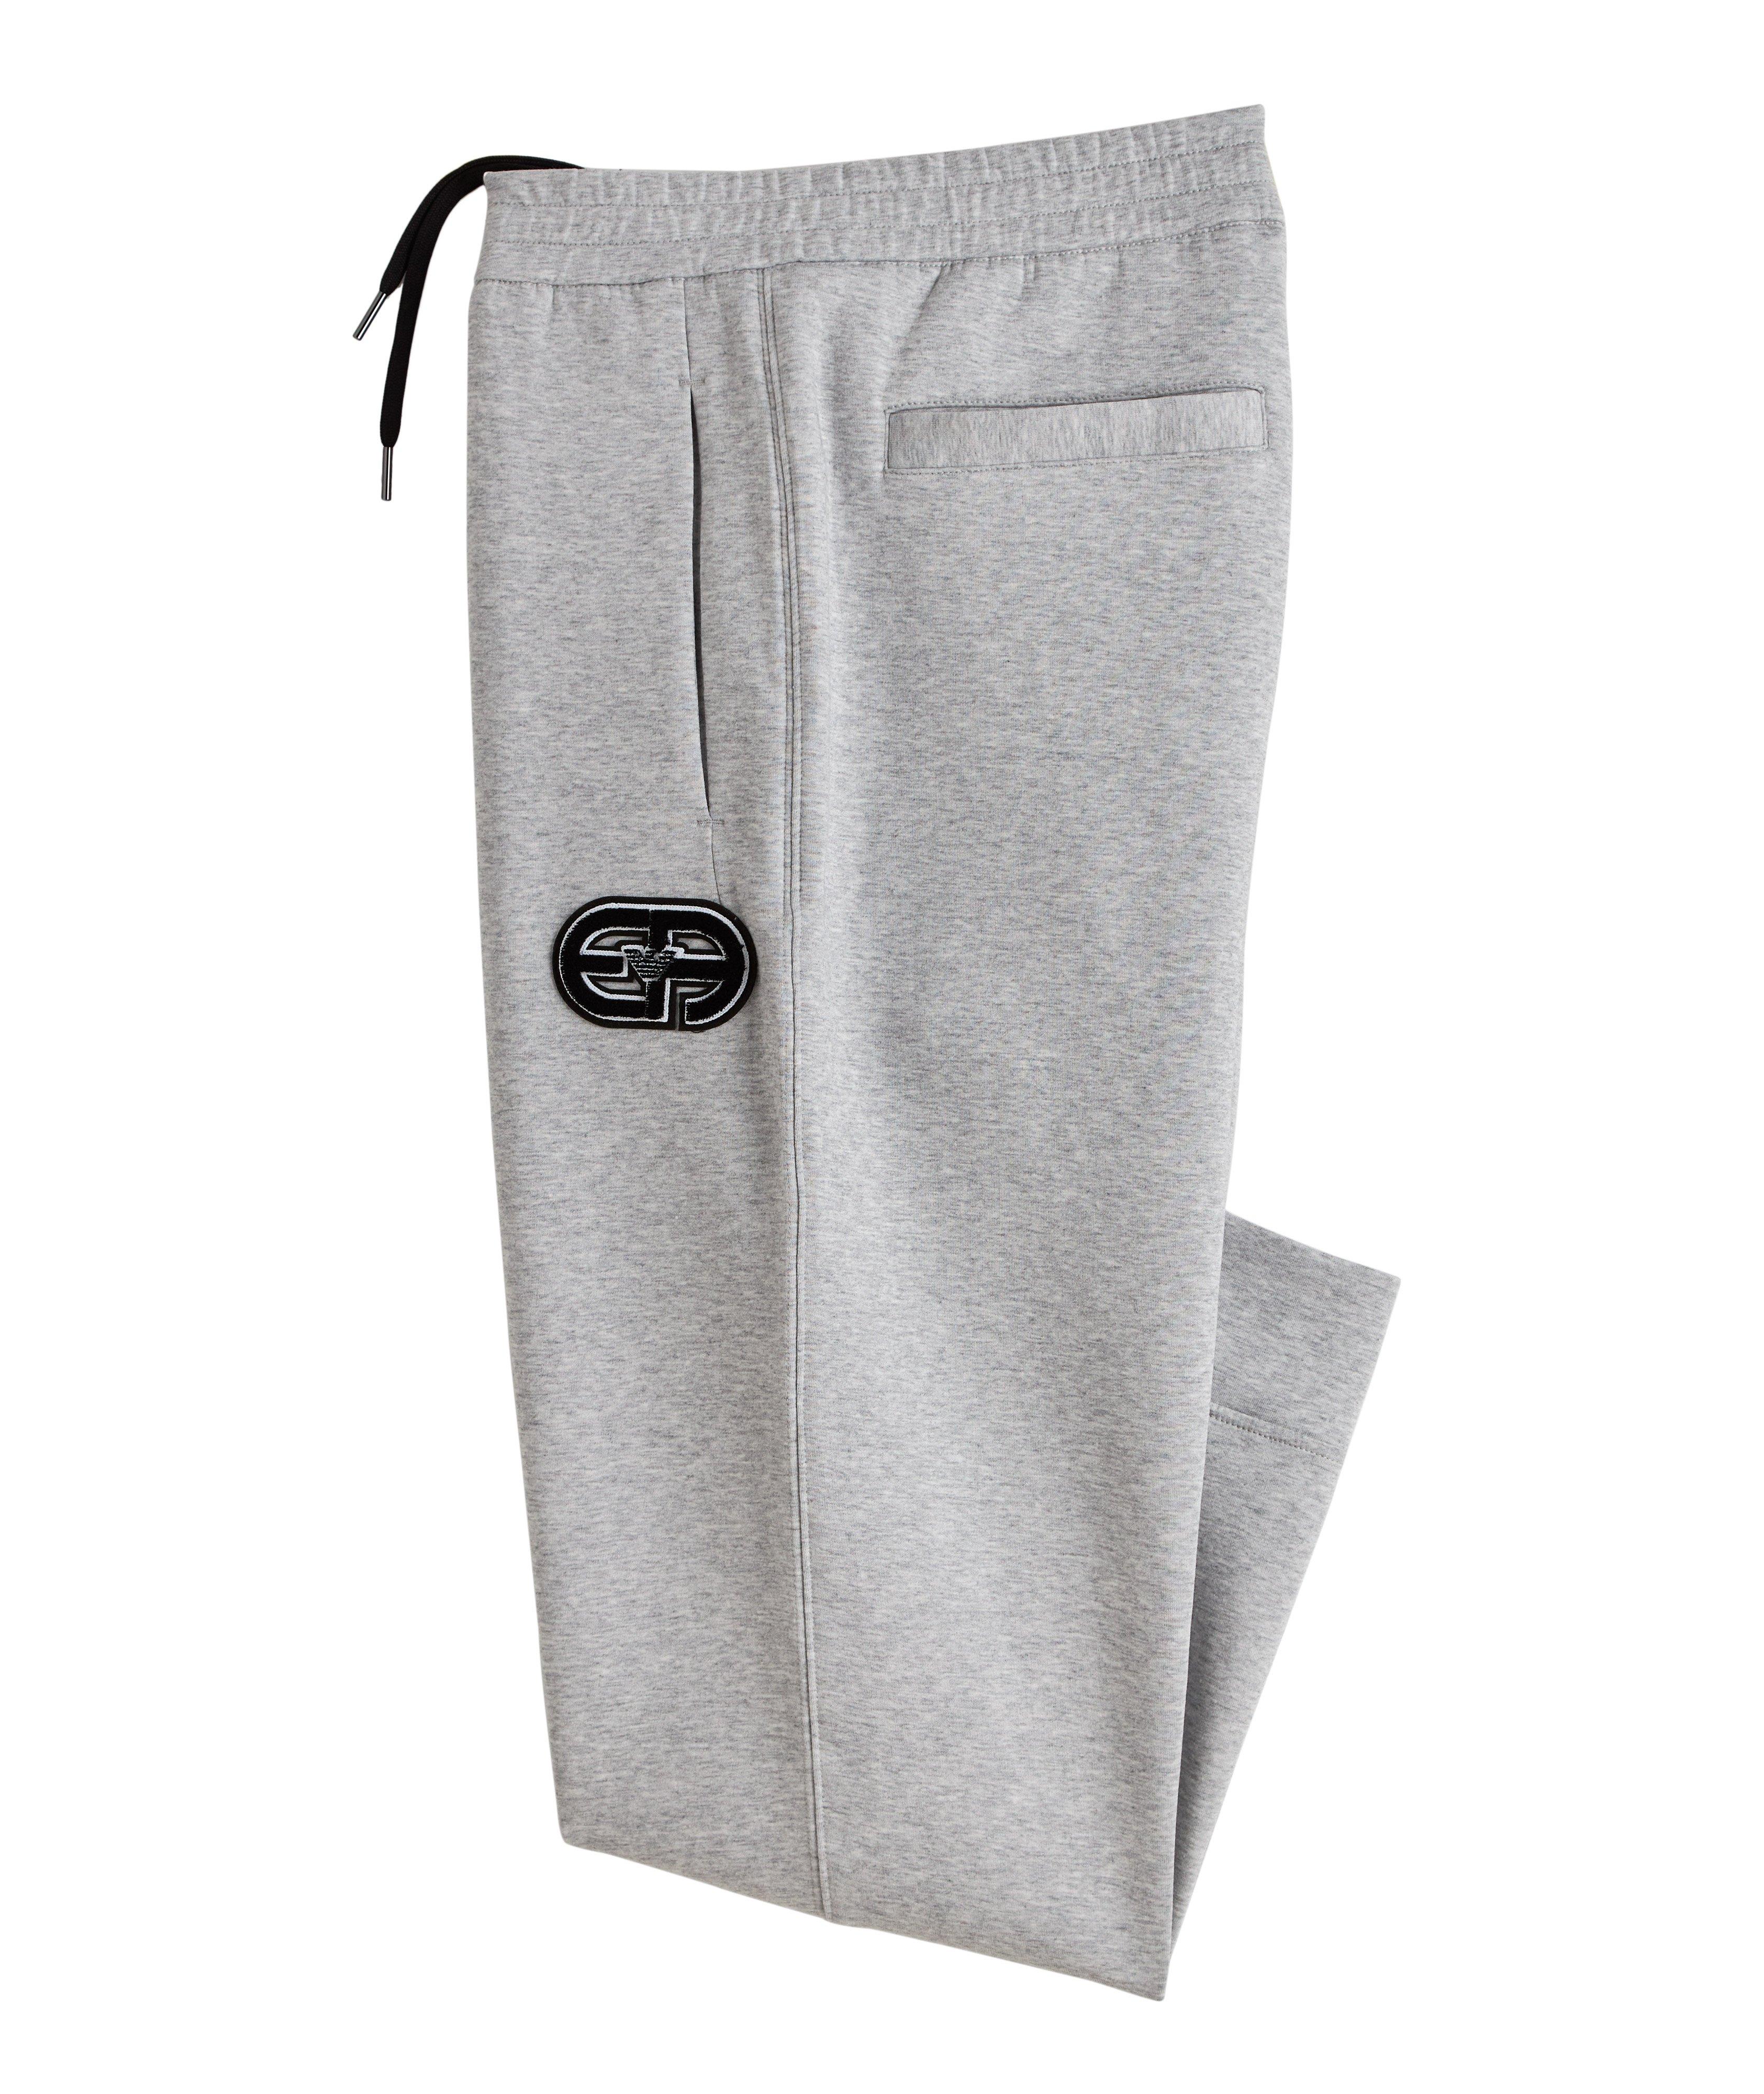 Pantalon sport en coton extensible avec logo image 0